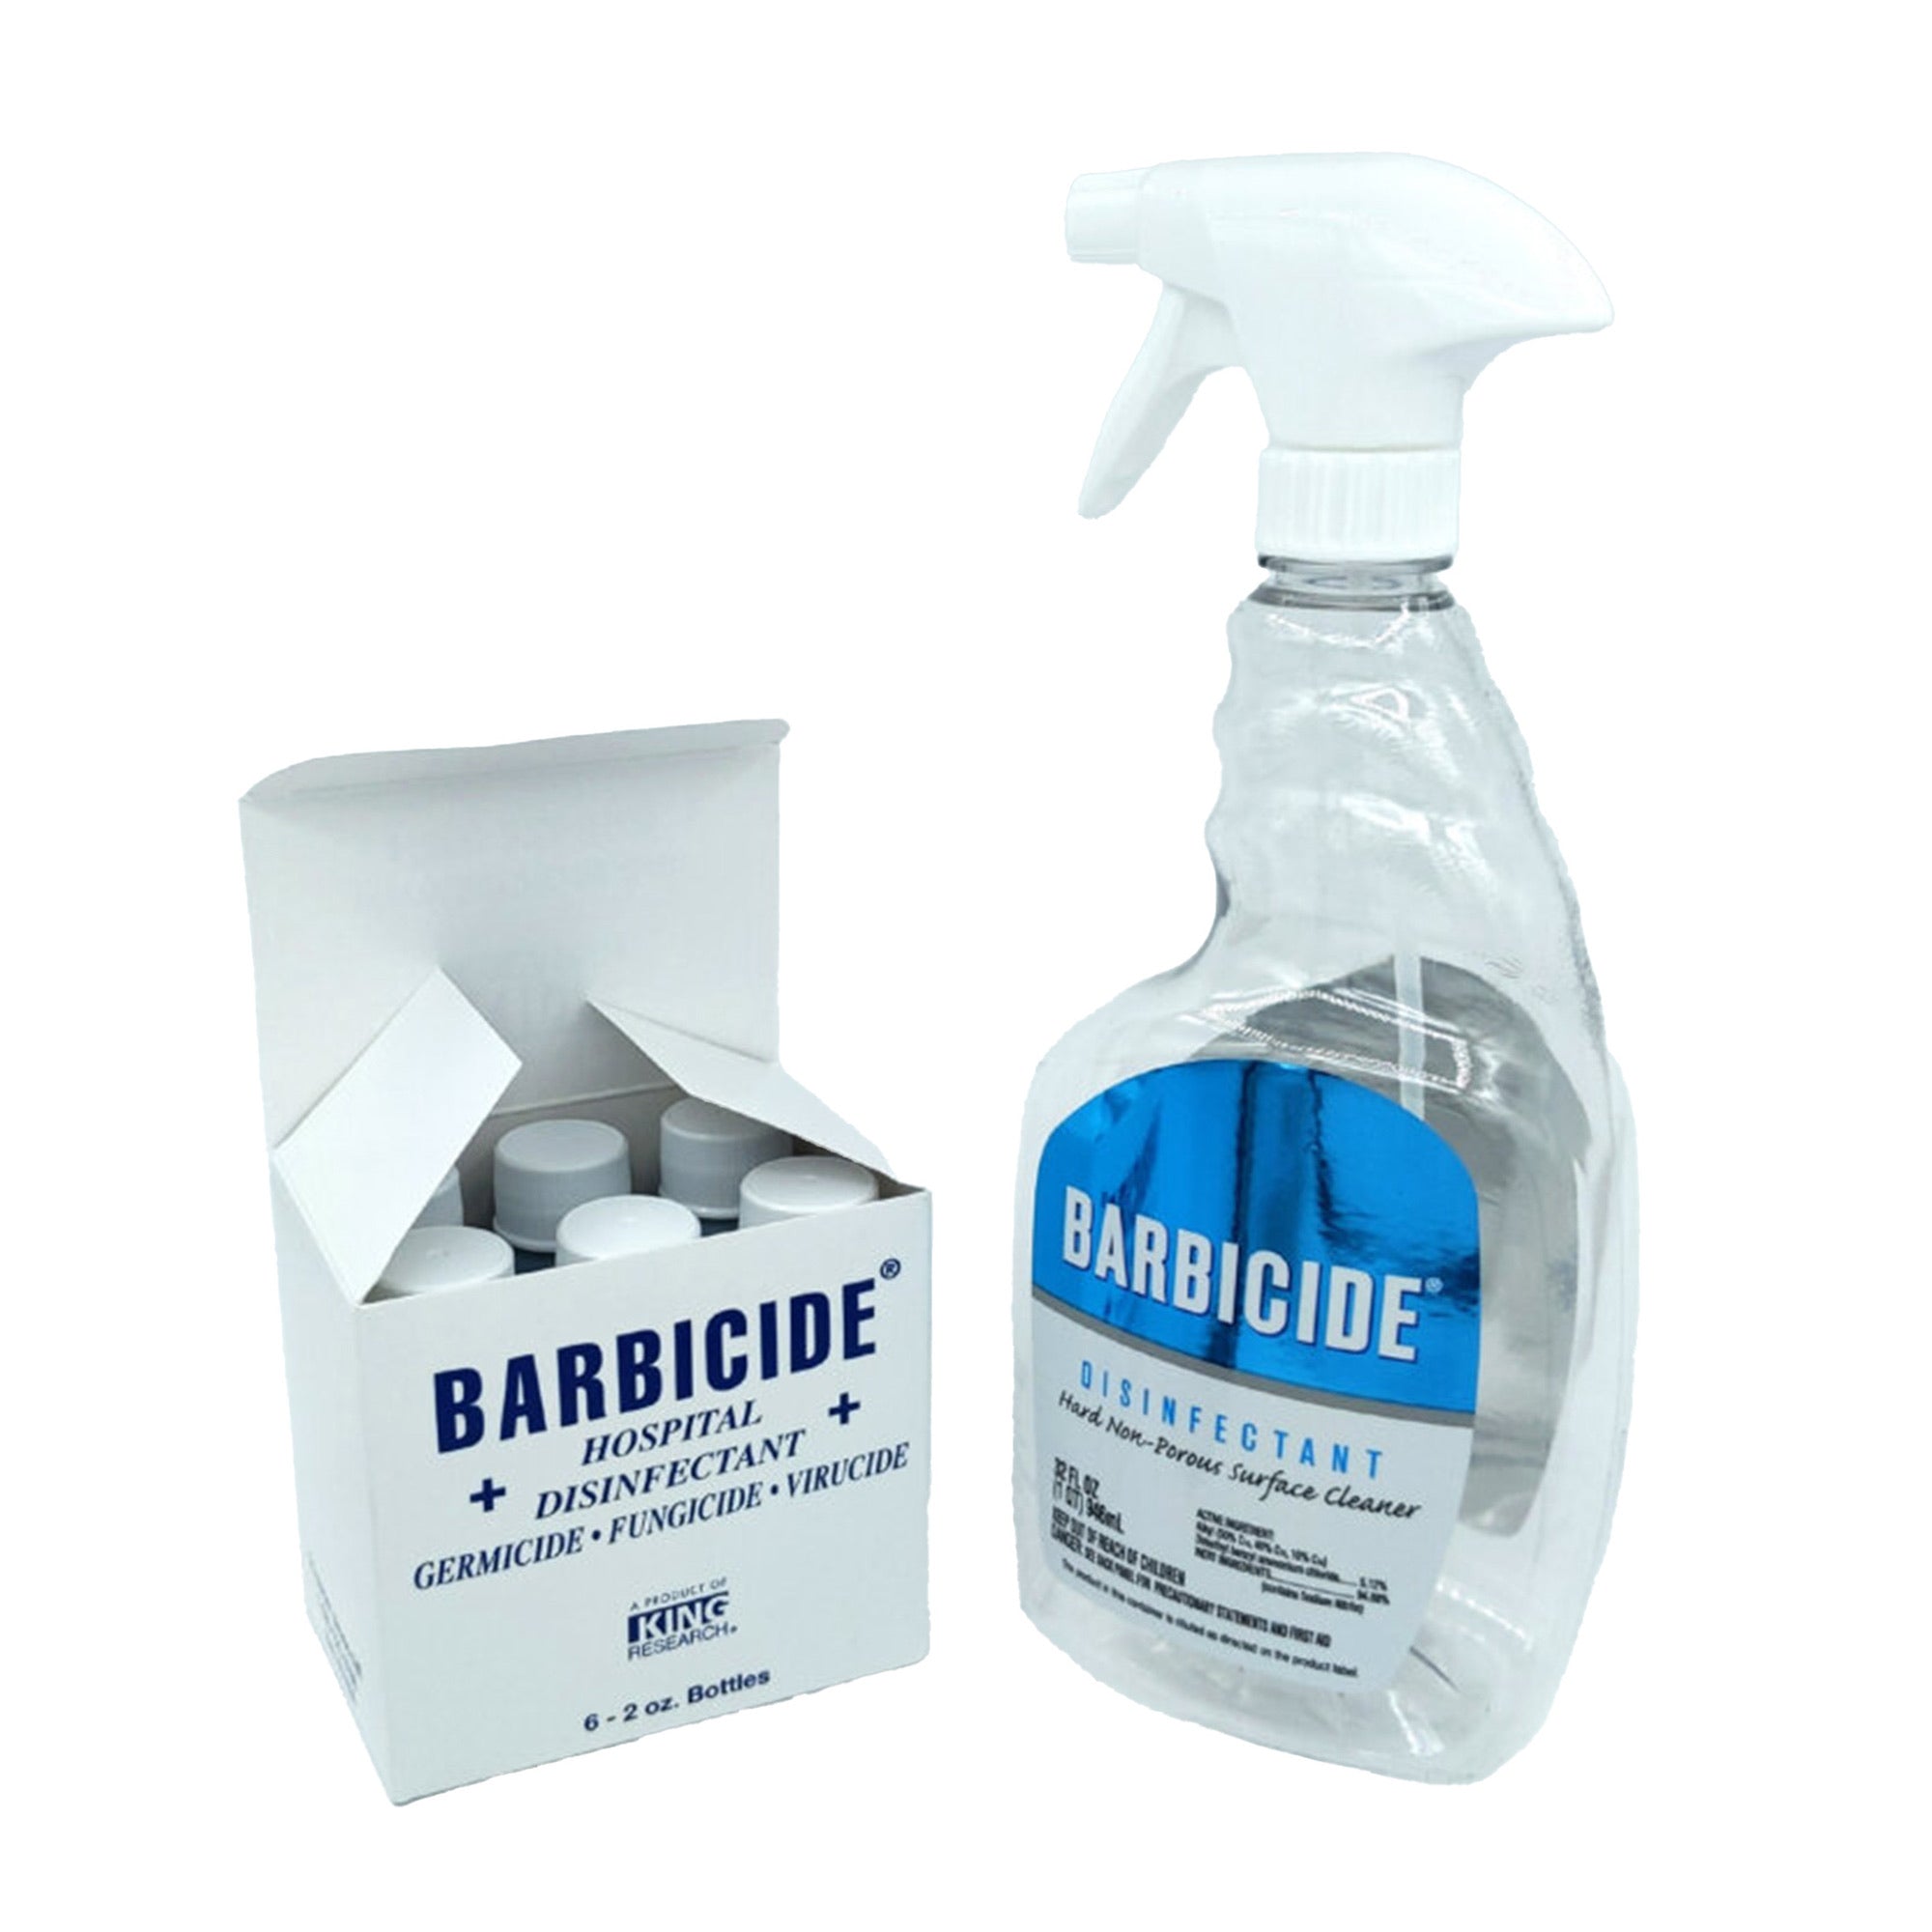 Barbicide - Hospital-Grade Disinfectant Spray Kit 6x59ml (2oz) Refills + Large Spray Bottle